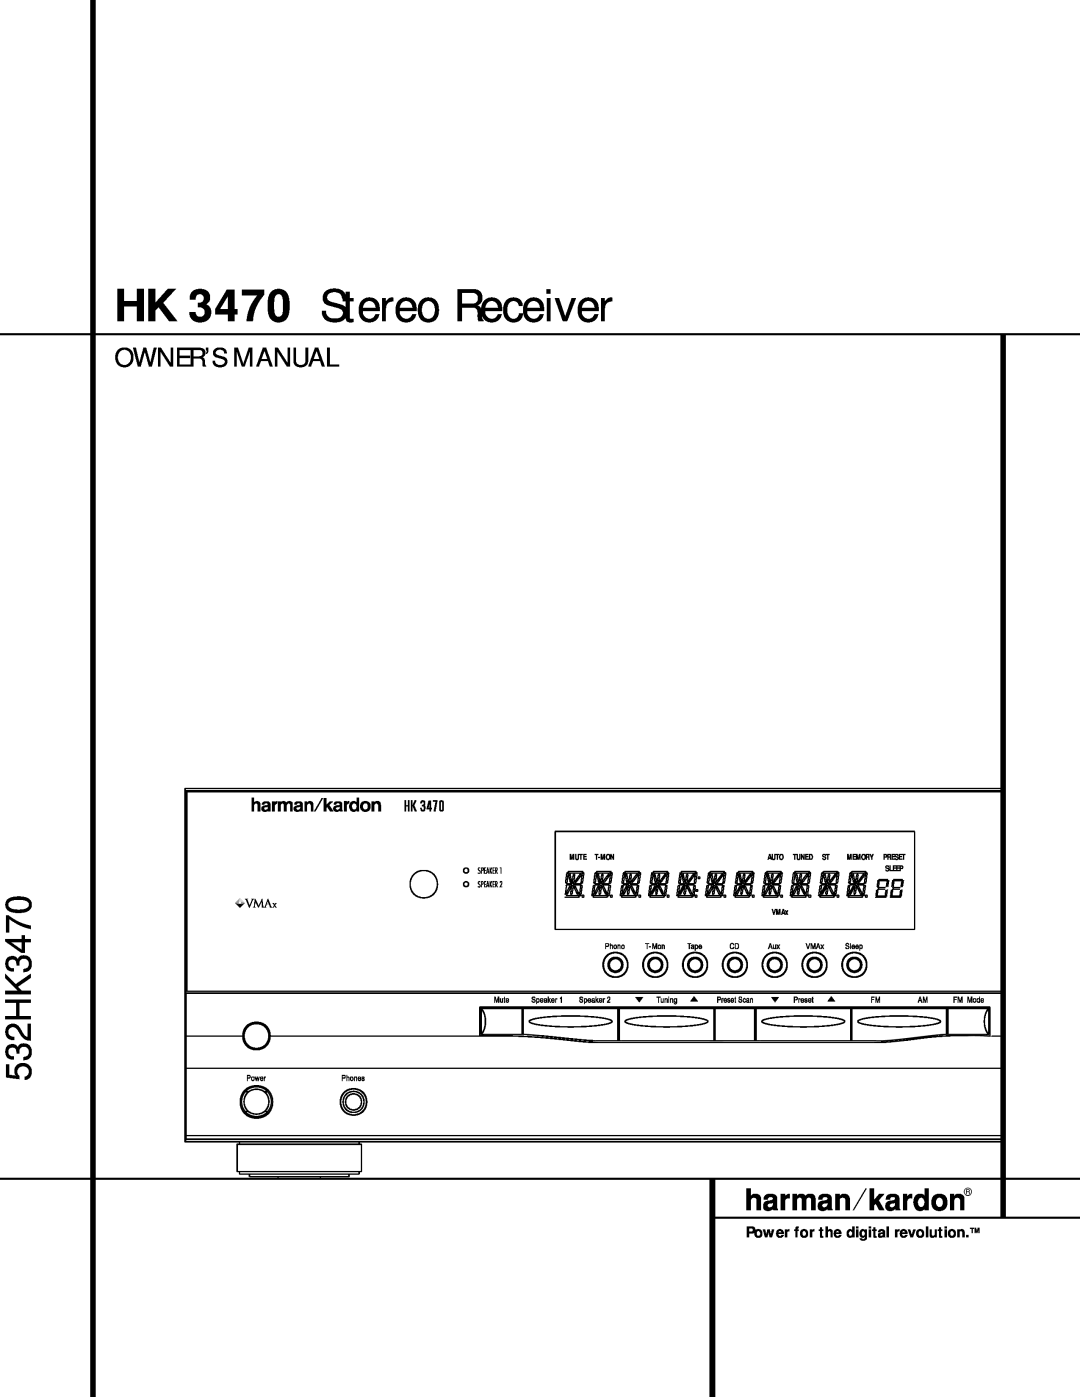 Harman-Kardon owner manual HK 3470 Stereo Receiver, Mute T-Mon, Auto, Tuned, Memory, VMAx, Preset, Sleep 